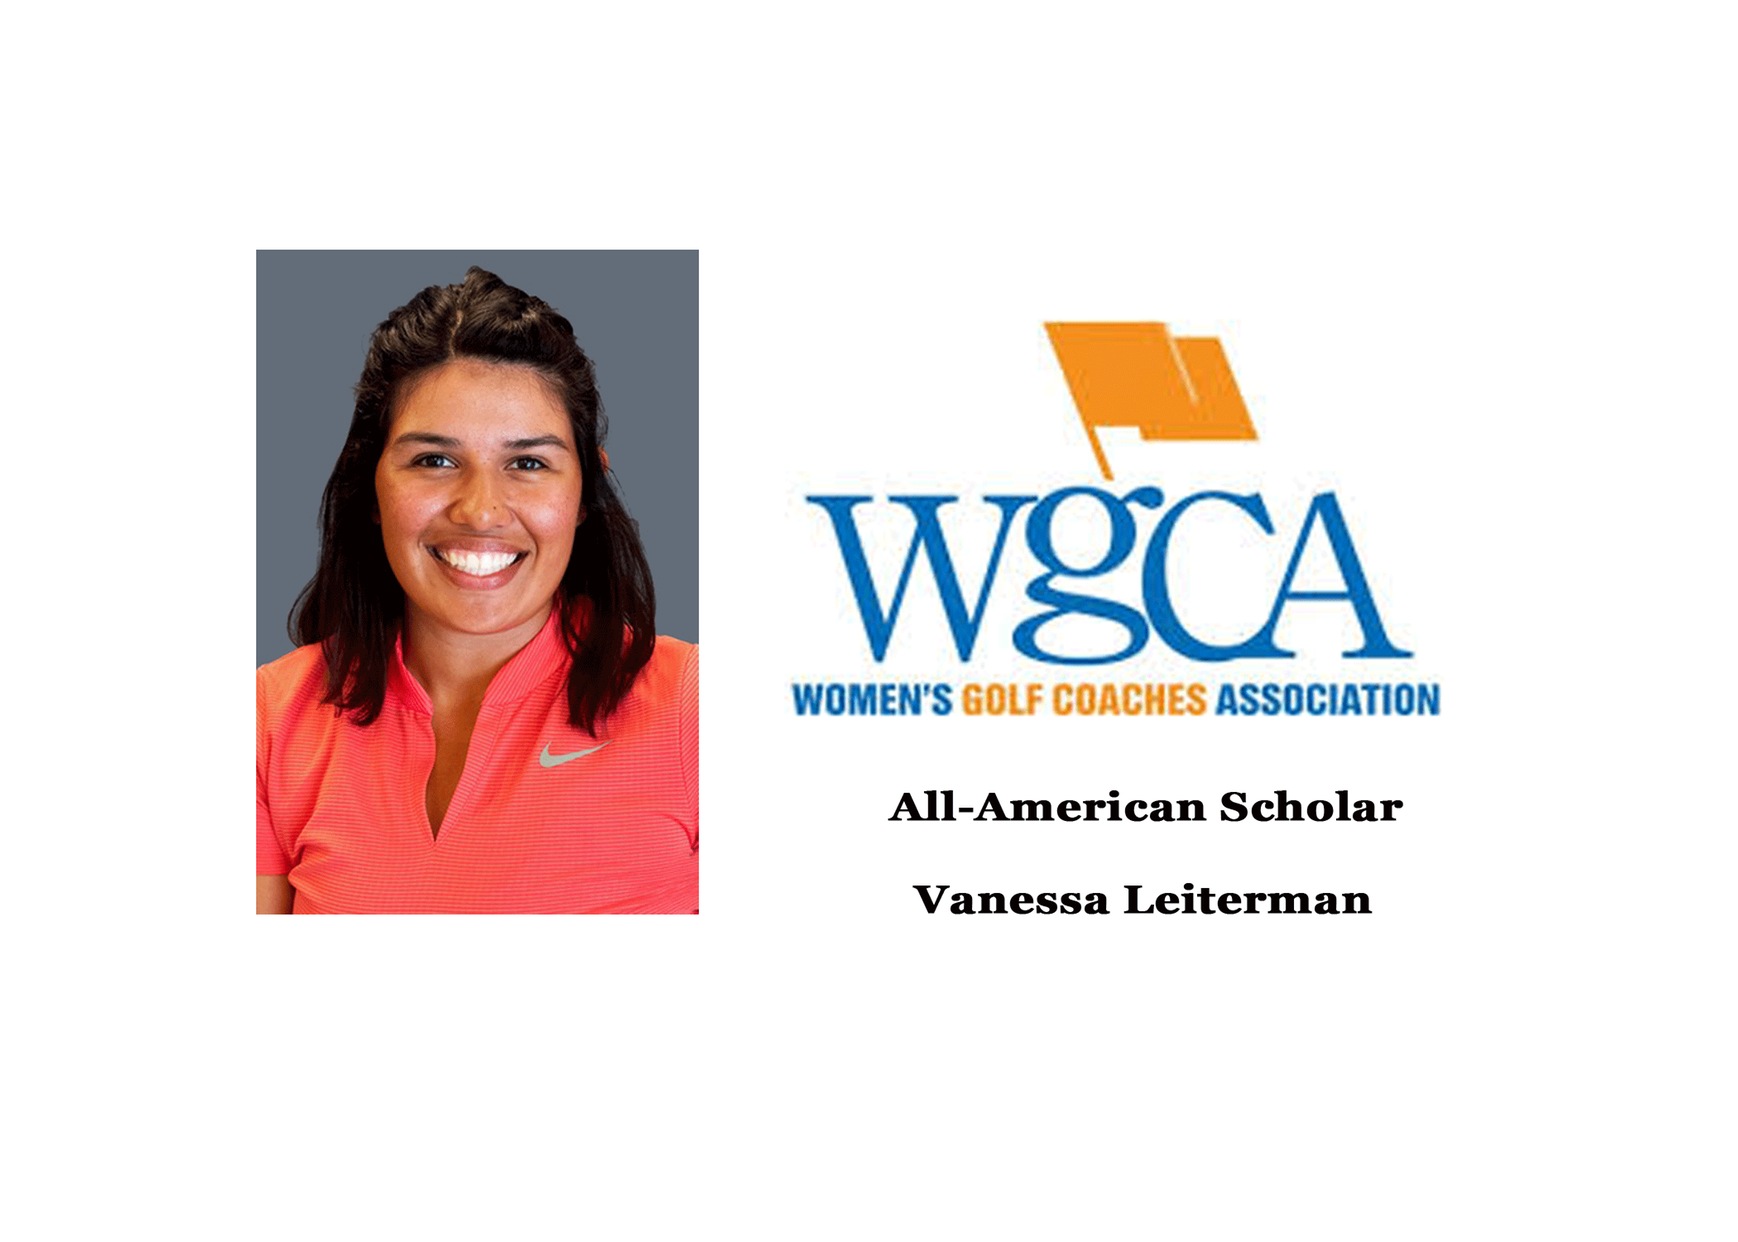 Leiterman selected as WGCA All-American Scholar